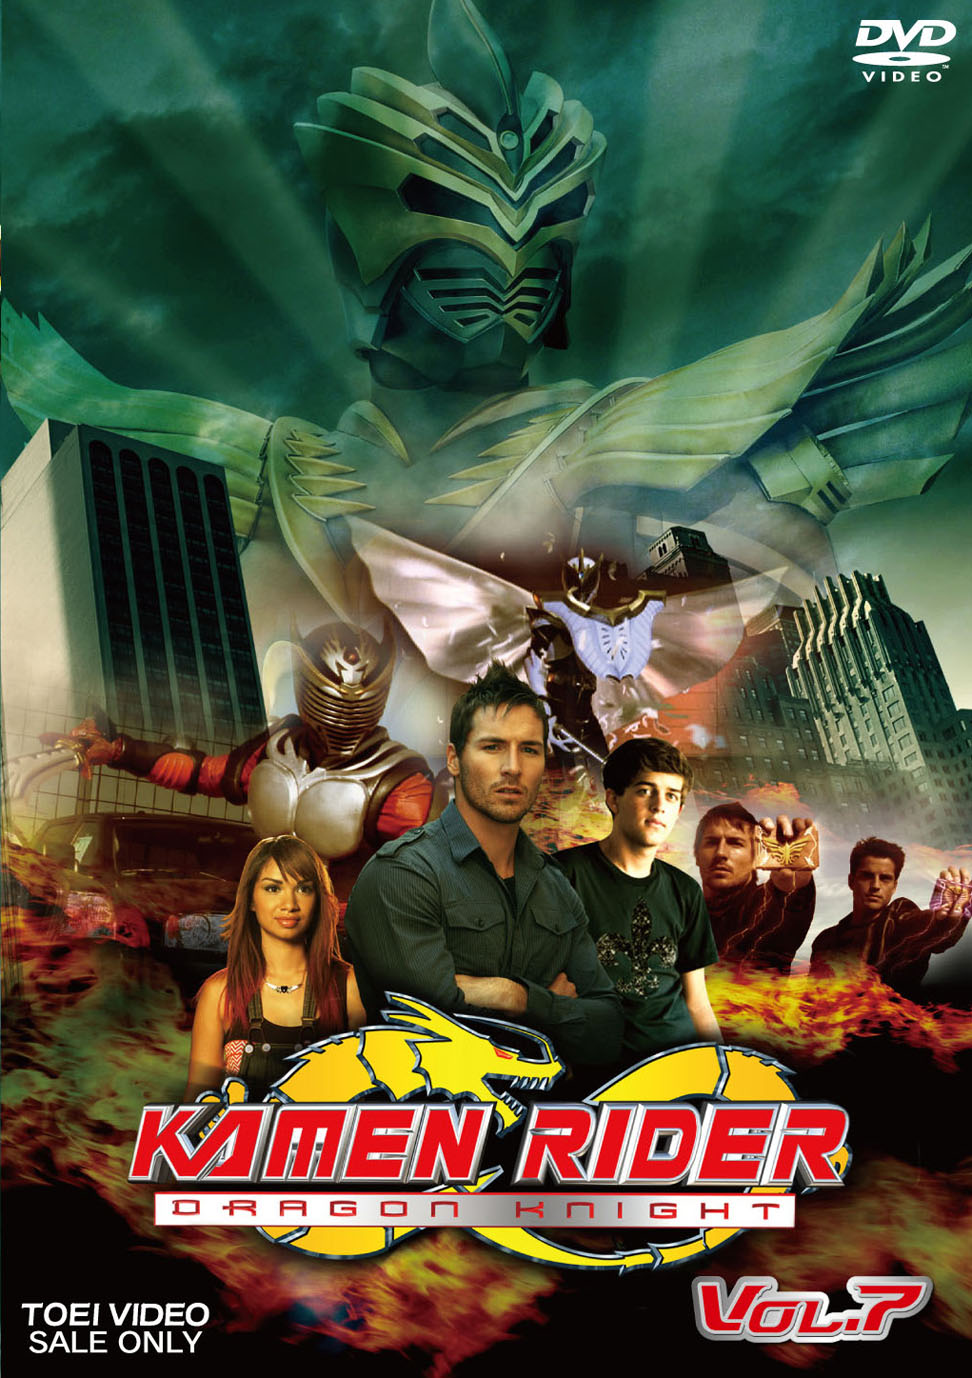 KAMEN RIDER DRAGON KNIGHT Vol.7